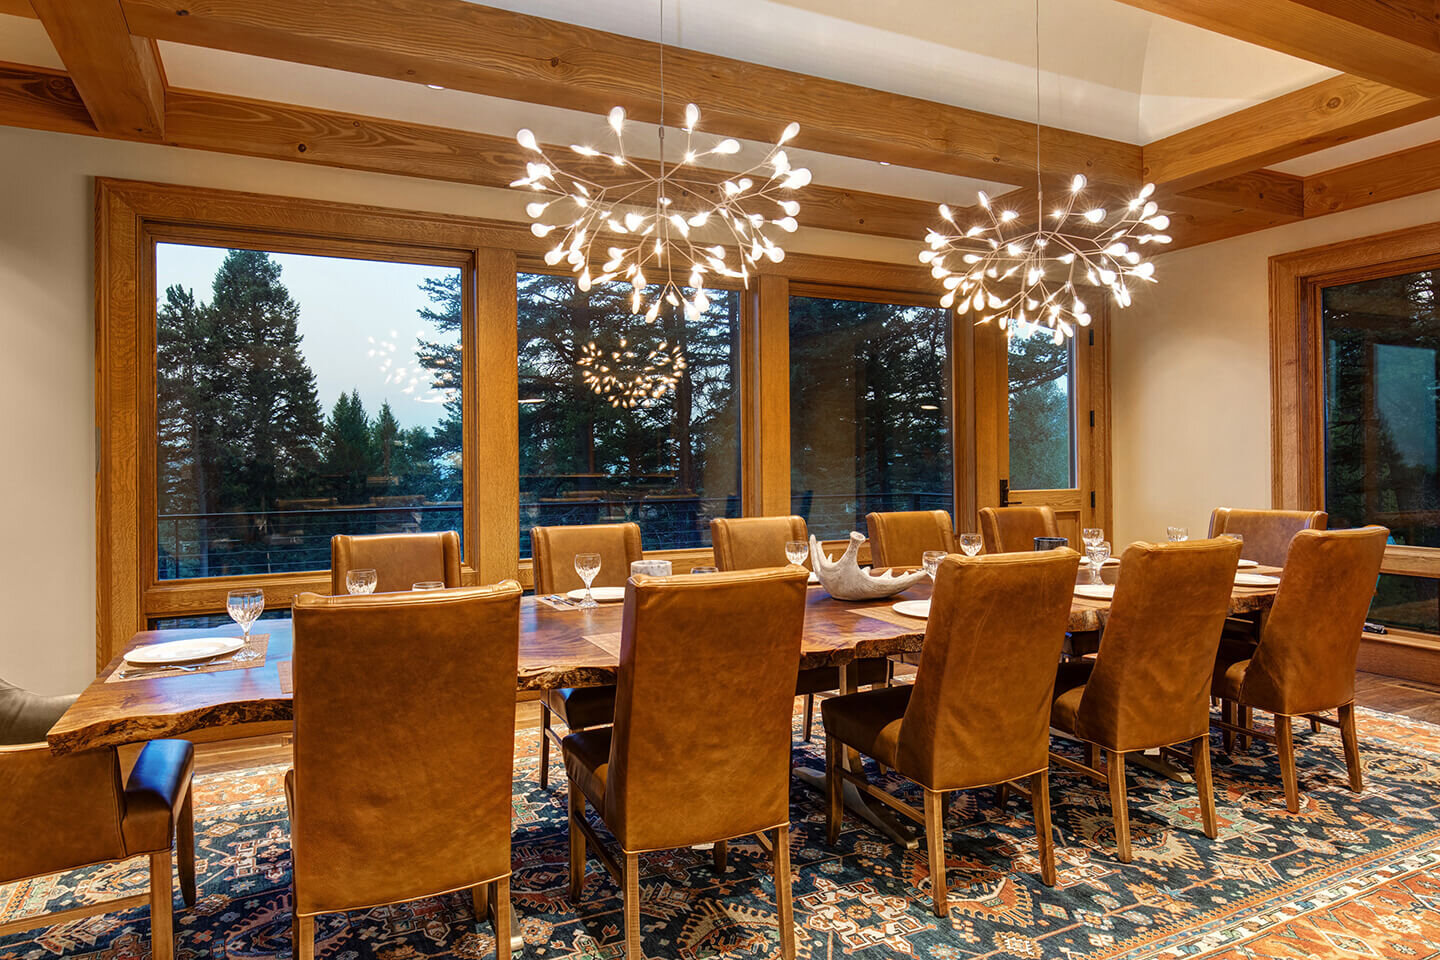 Dining room with designer chandelier